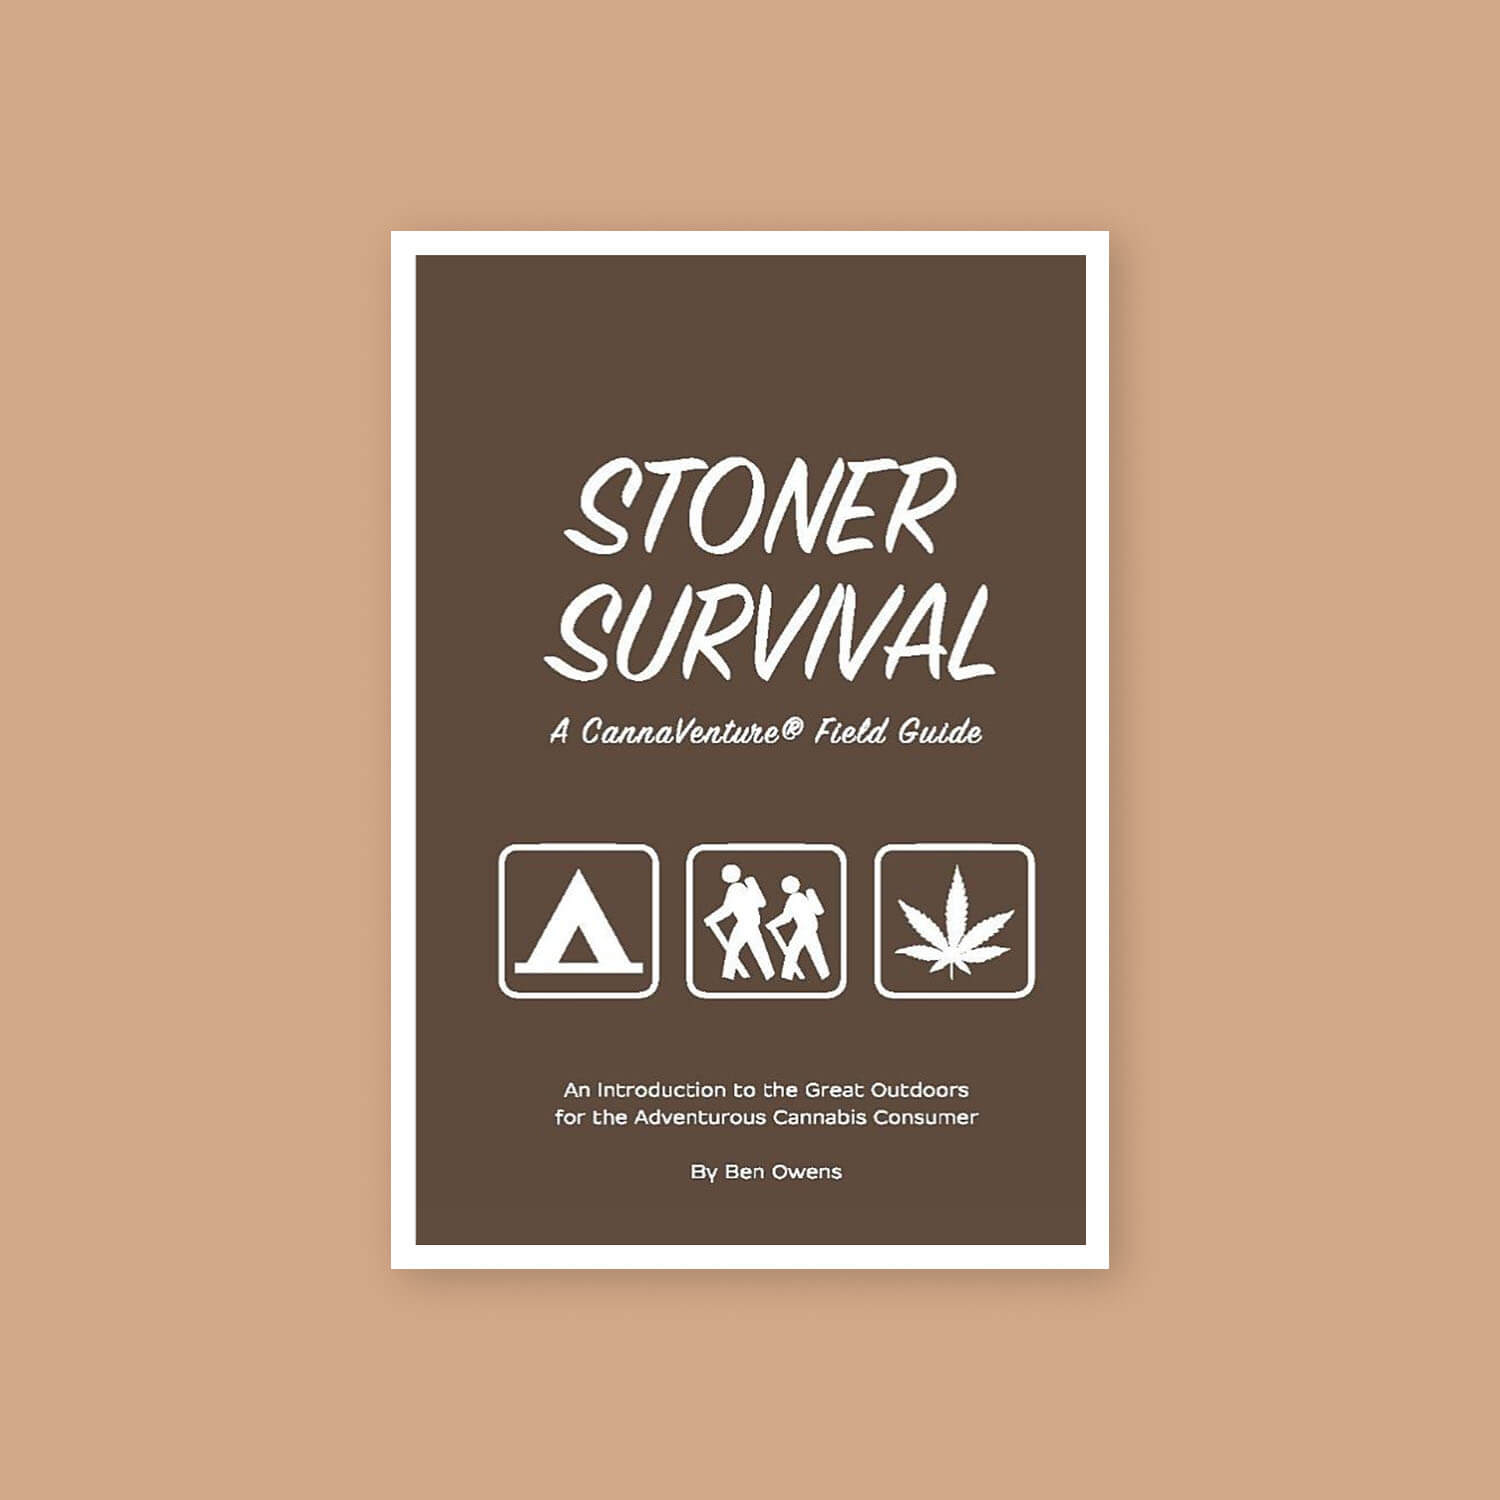 Stoner survival